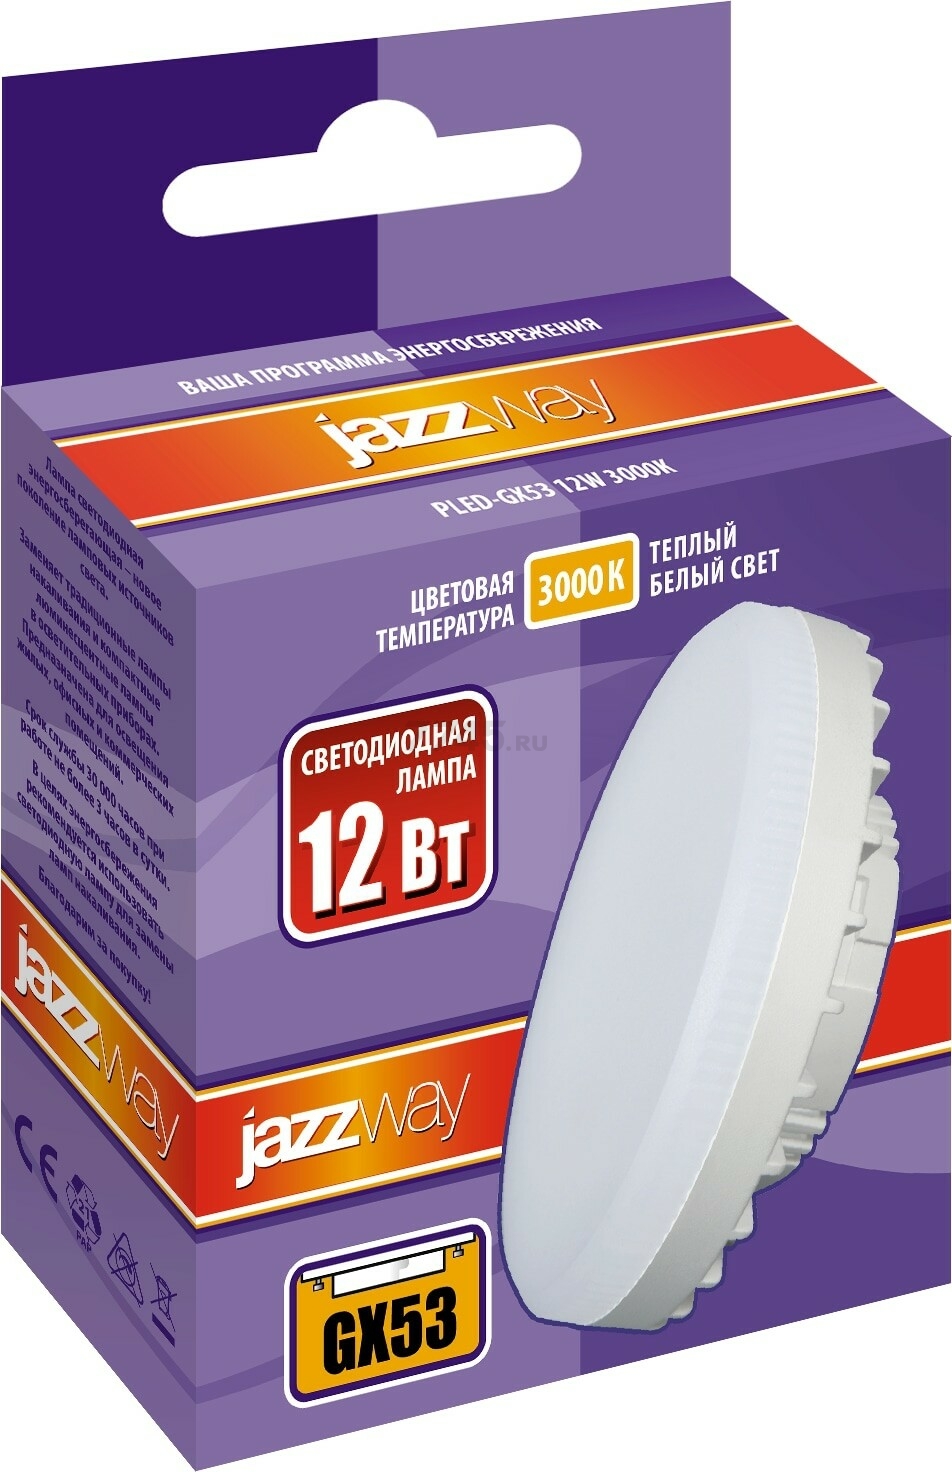 Лампа светодиодная GX53 JAZZWAY Pled power таблетка 12 Вт 3000К (1029102) - Фото 3